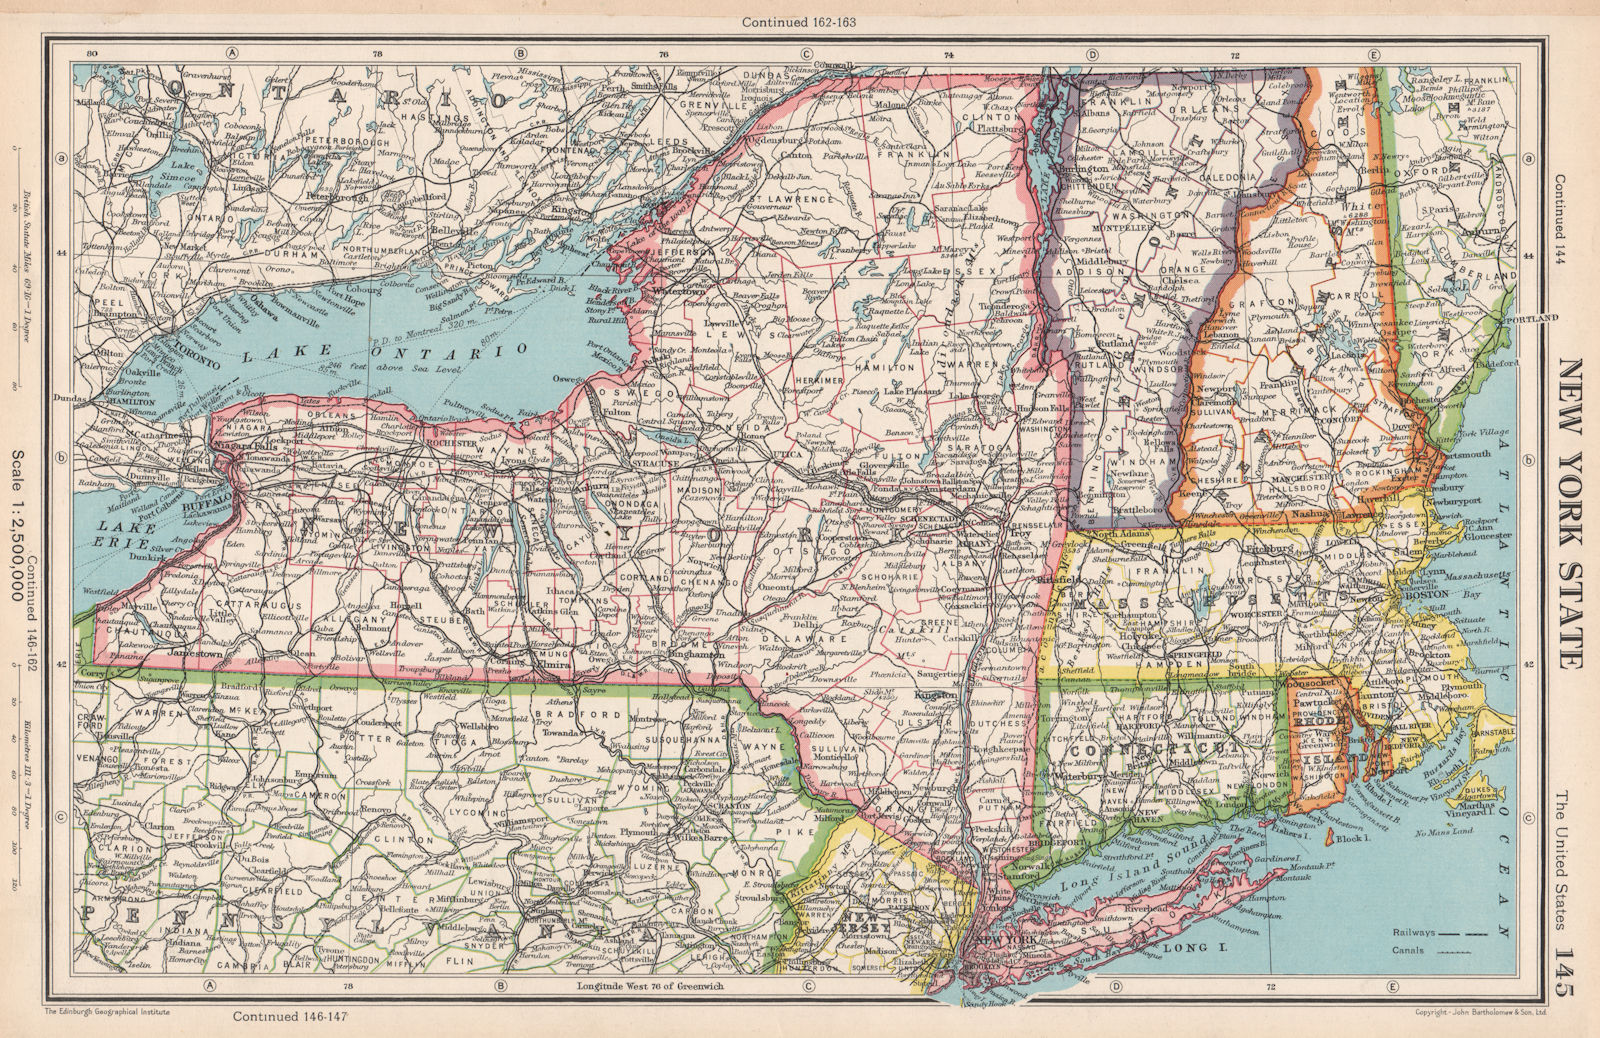 NEW YORK STATE. + Connecticut Vermont Massachusetts RI. BARTHOLOMEW 1952 map